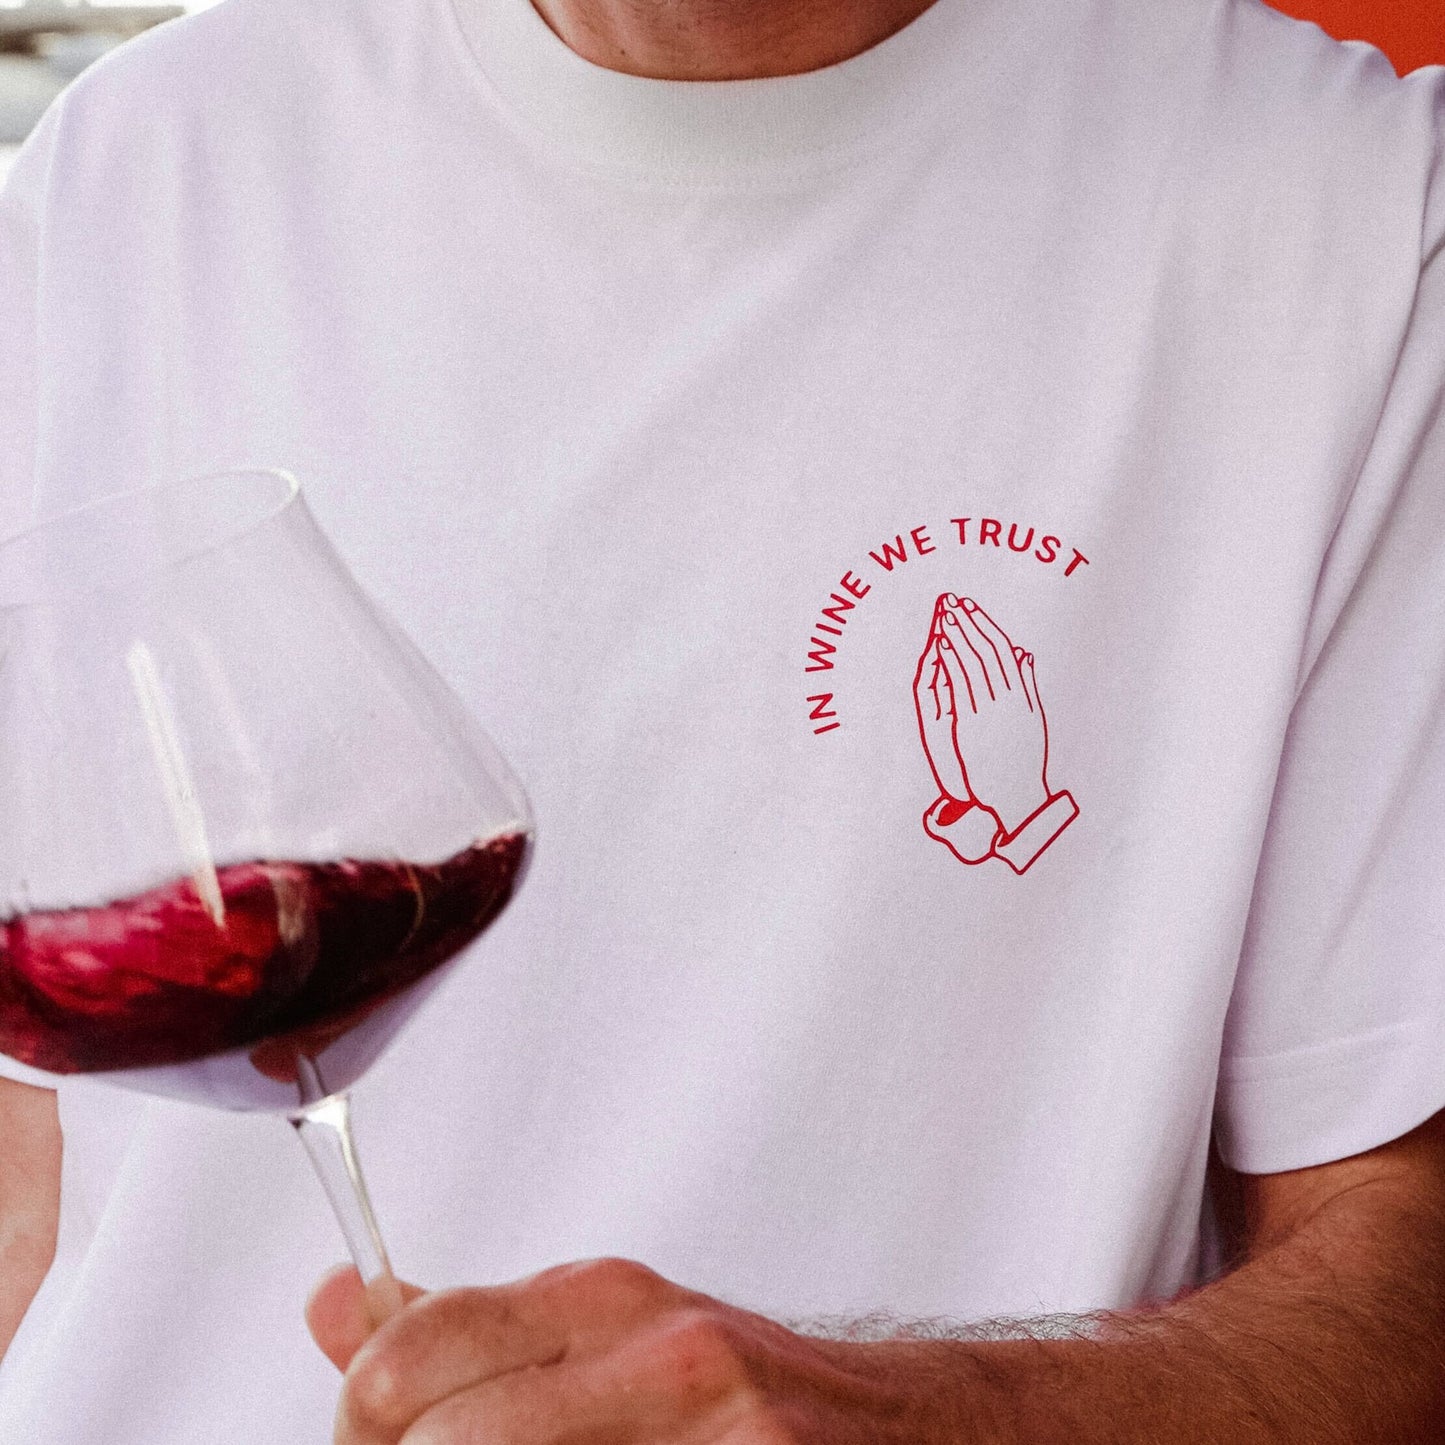 In Wine We Trust T-Shirt